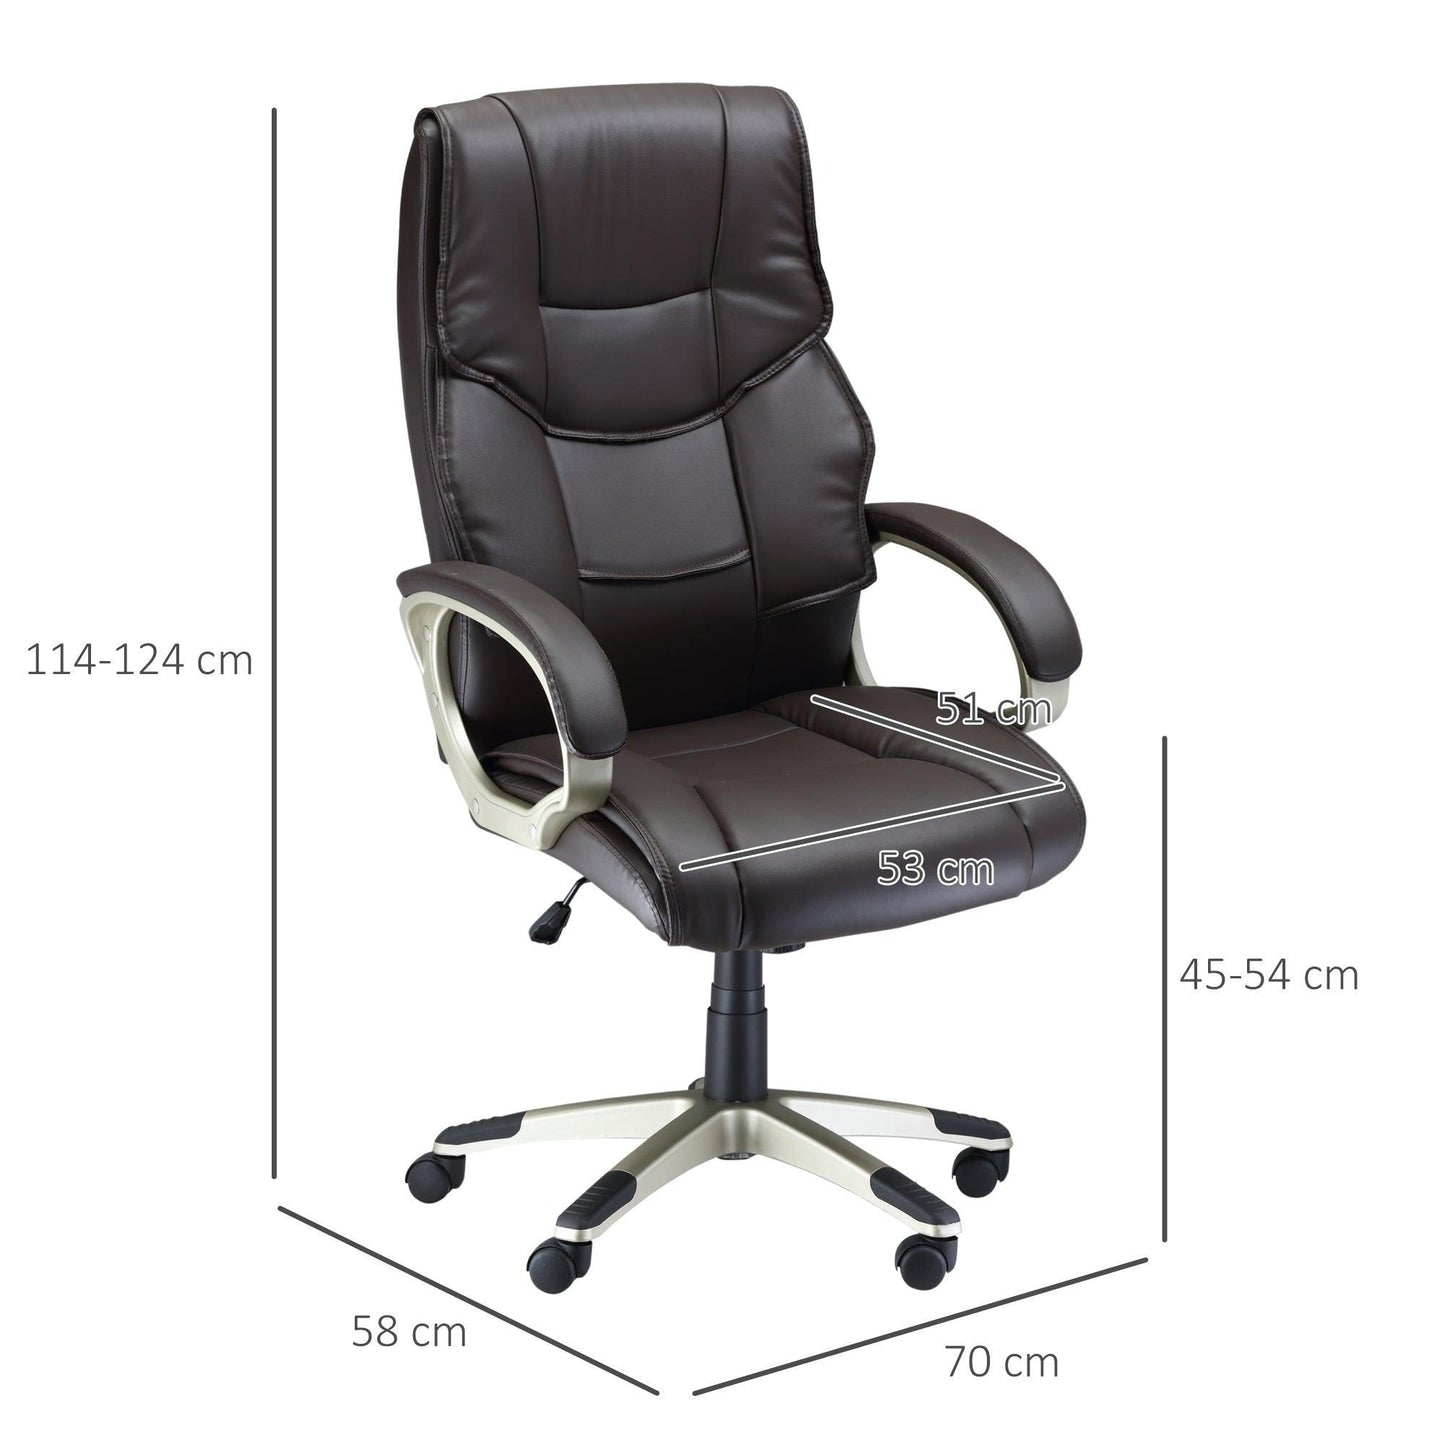 HOMCOM High Back Desk Chair: Ergonomic & Stylish - ALL4U RETAILER LTD